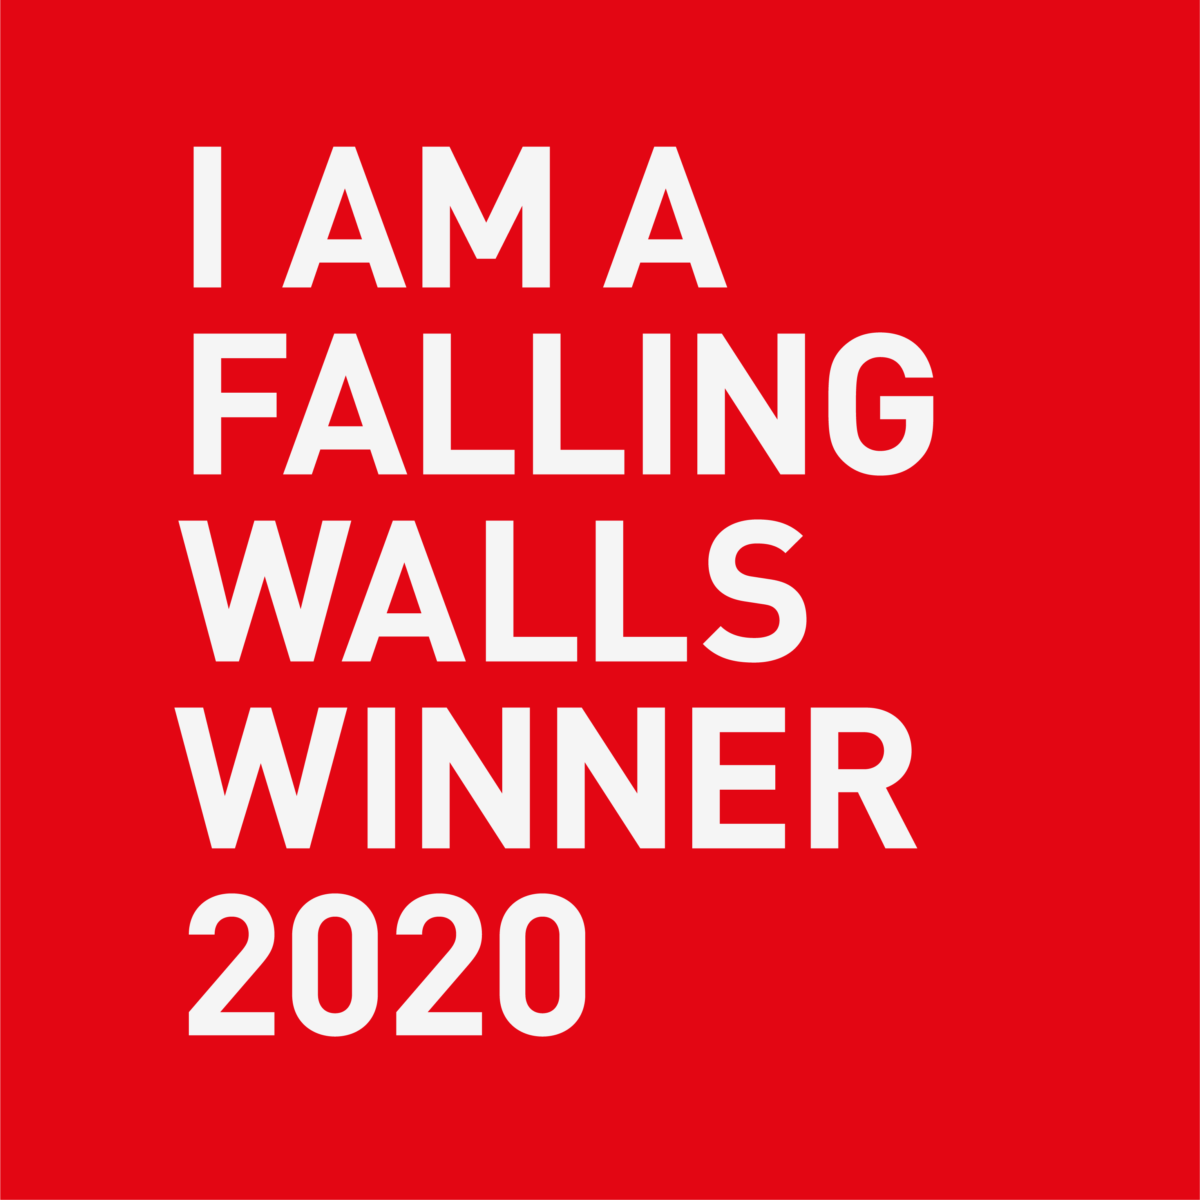 Winner of the Falling Walls Venture Award 2020